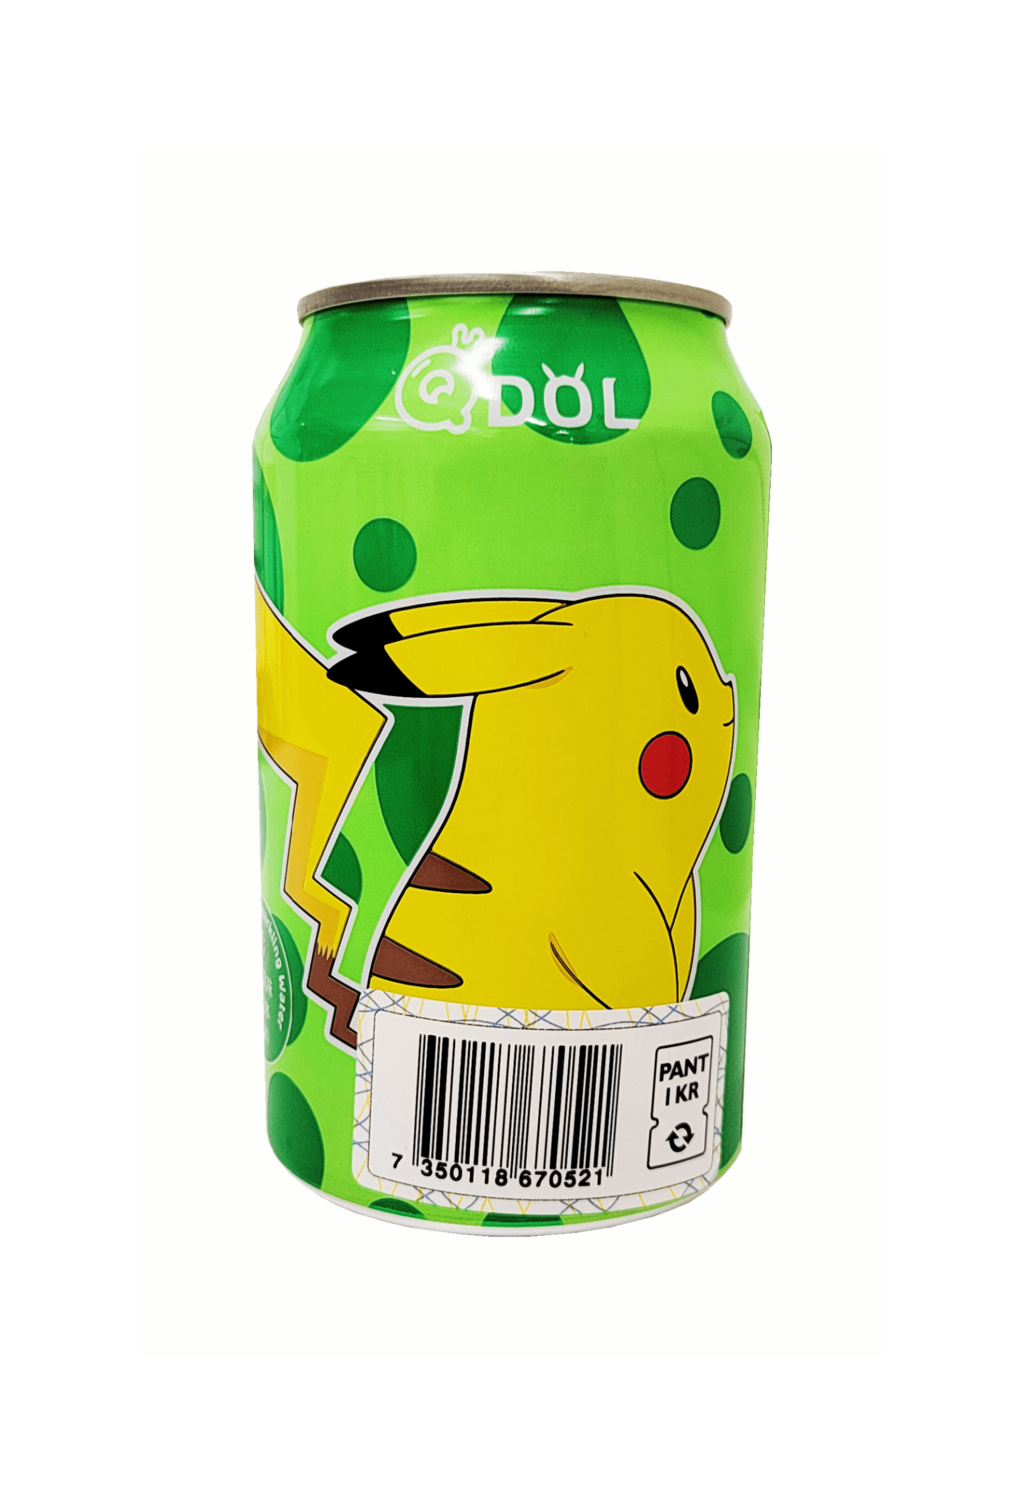 Soda Lime Smak 330ml QDOL Pokemon 330ml Kina